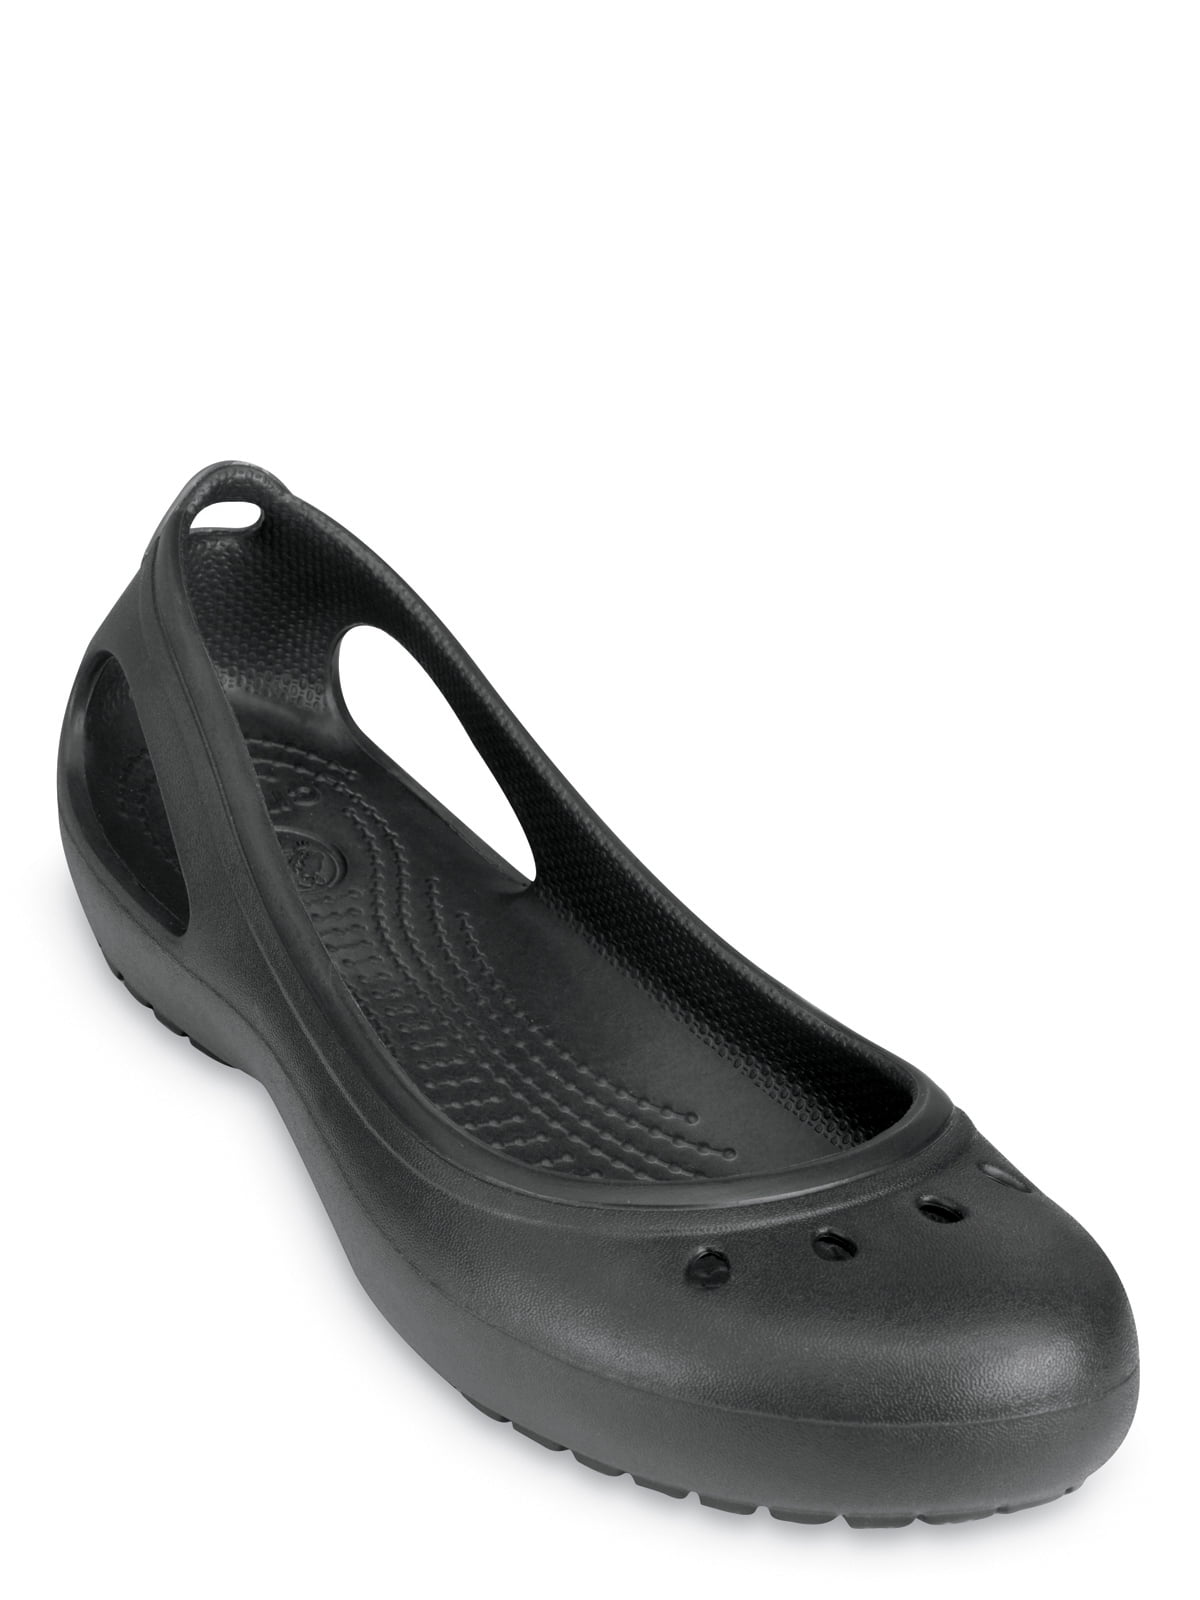 Crocs - Crocs Women's Kadee Flat Shoes - Walmart.com - Walmart.com